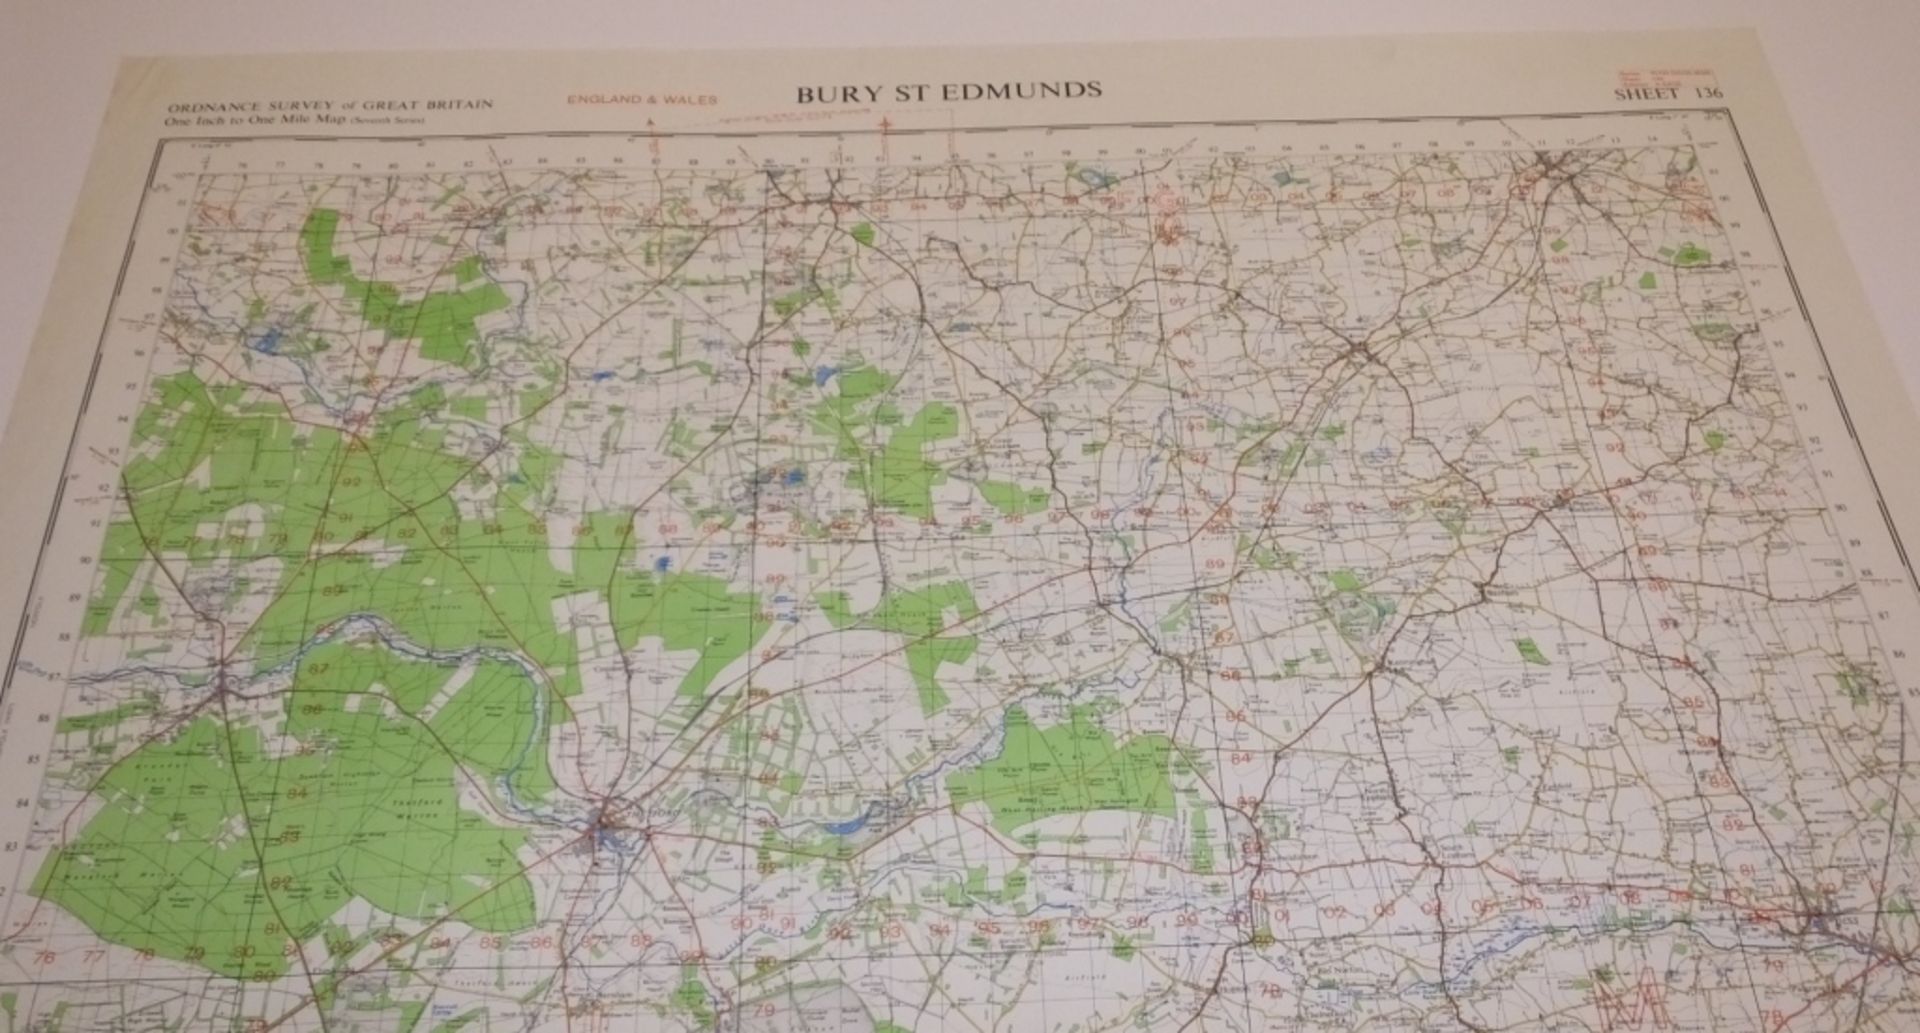 21x ENGLAND & WALES MAP BURY ST EDMONDS 1INCH 1MILE 1958 7TH SERIES 4GSGS SHEET 136 - Bild 3 aus 5